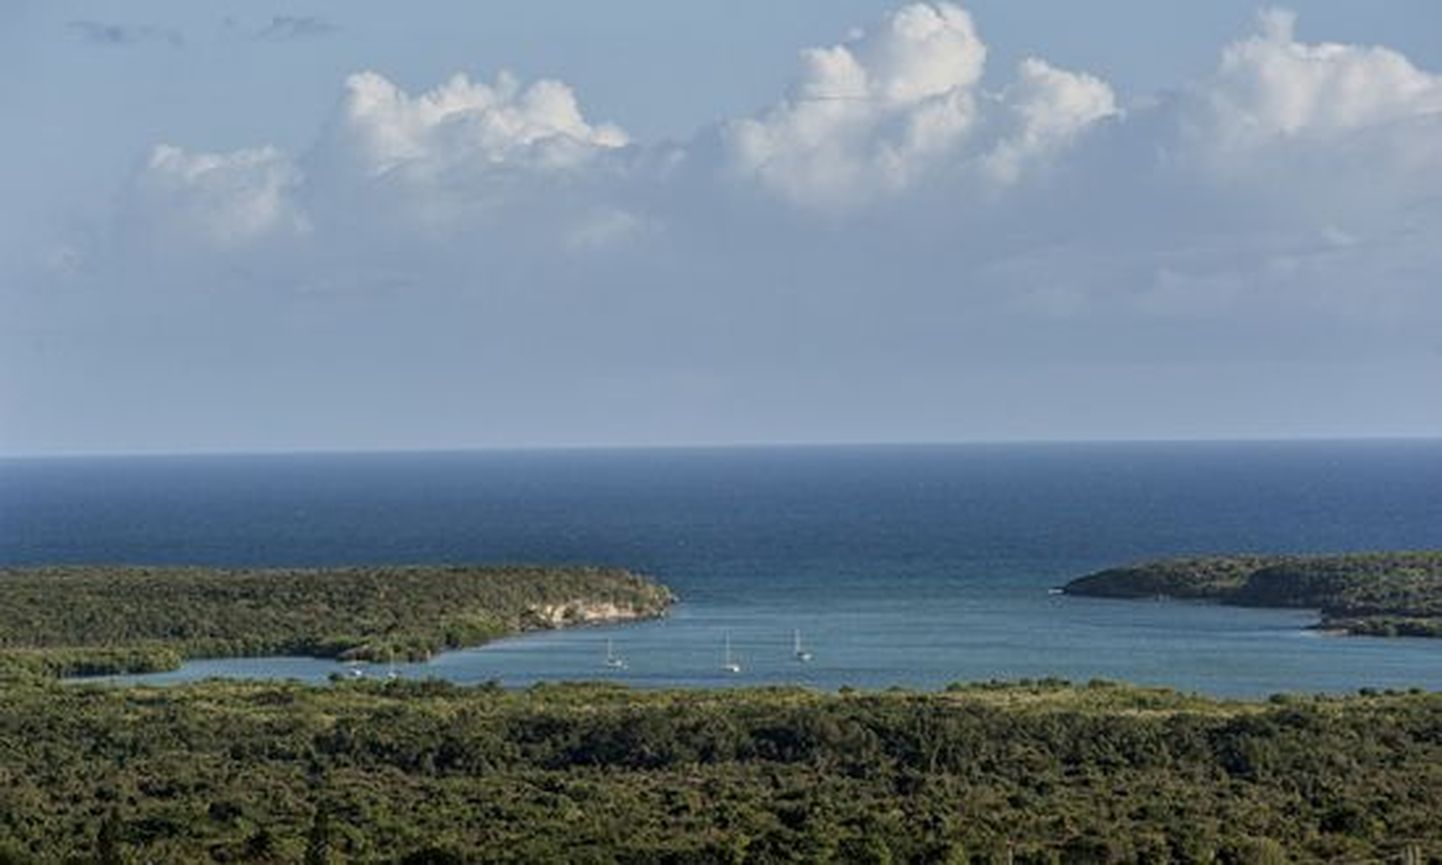 Mosquito Bay ehk Moskiito laht - helendav laht Puerto Ricos.